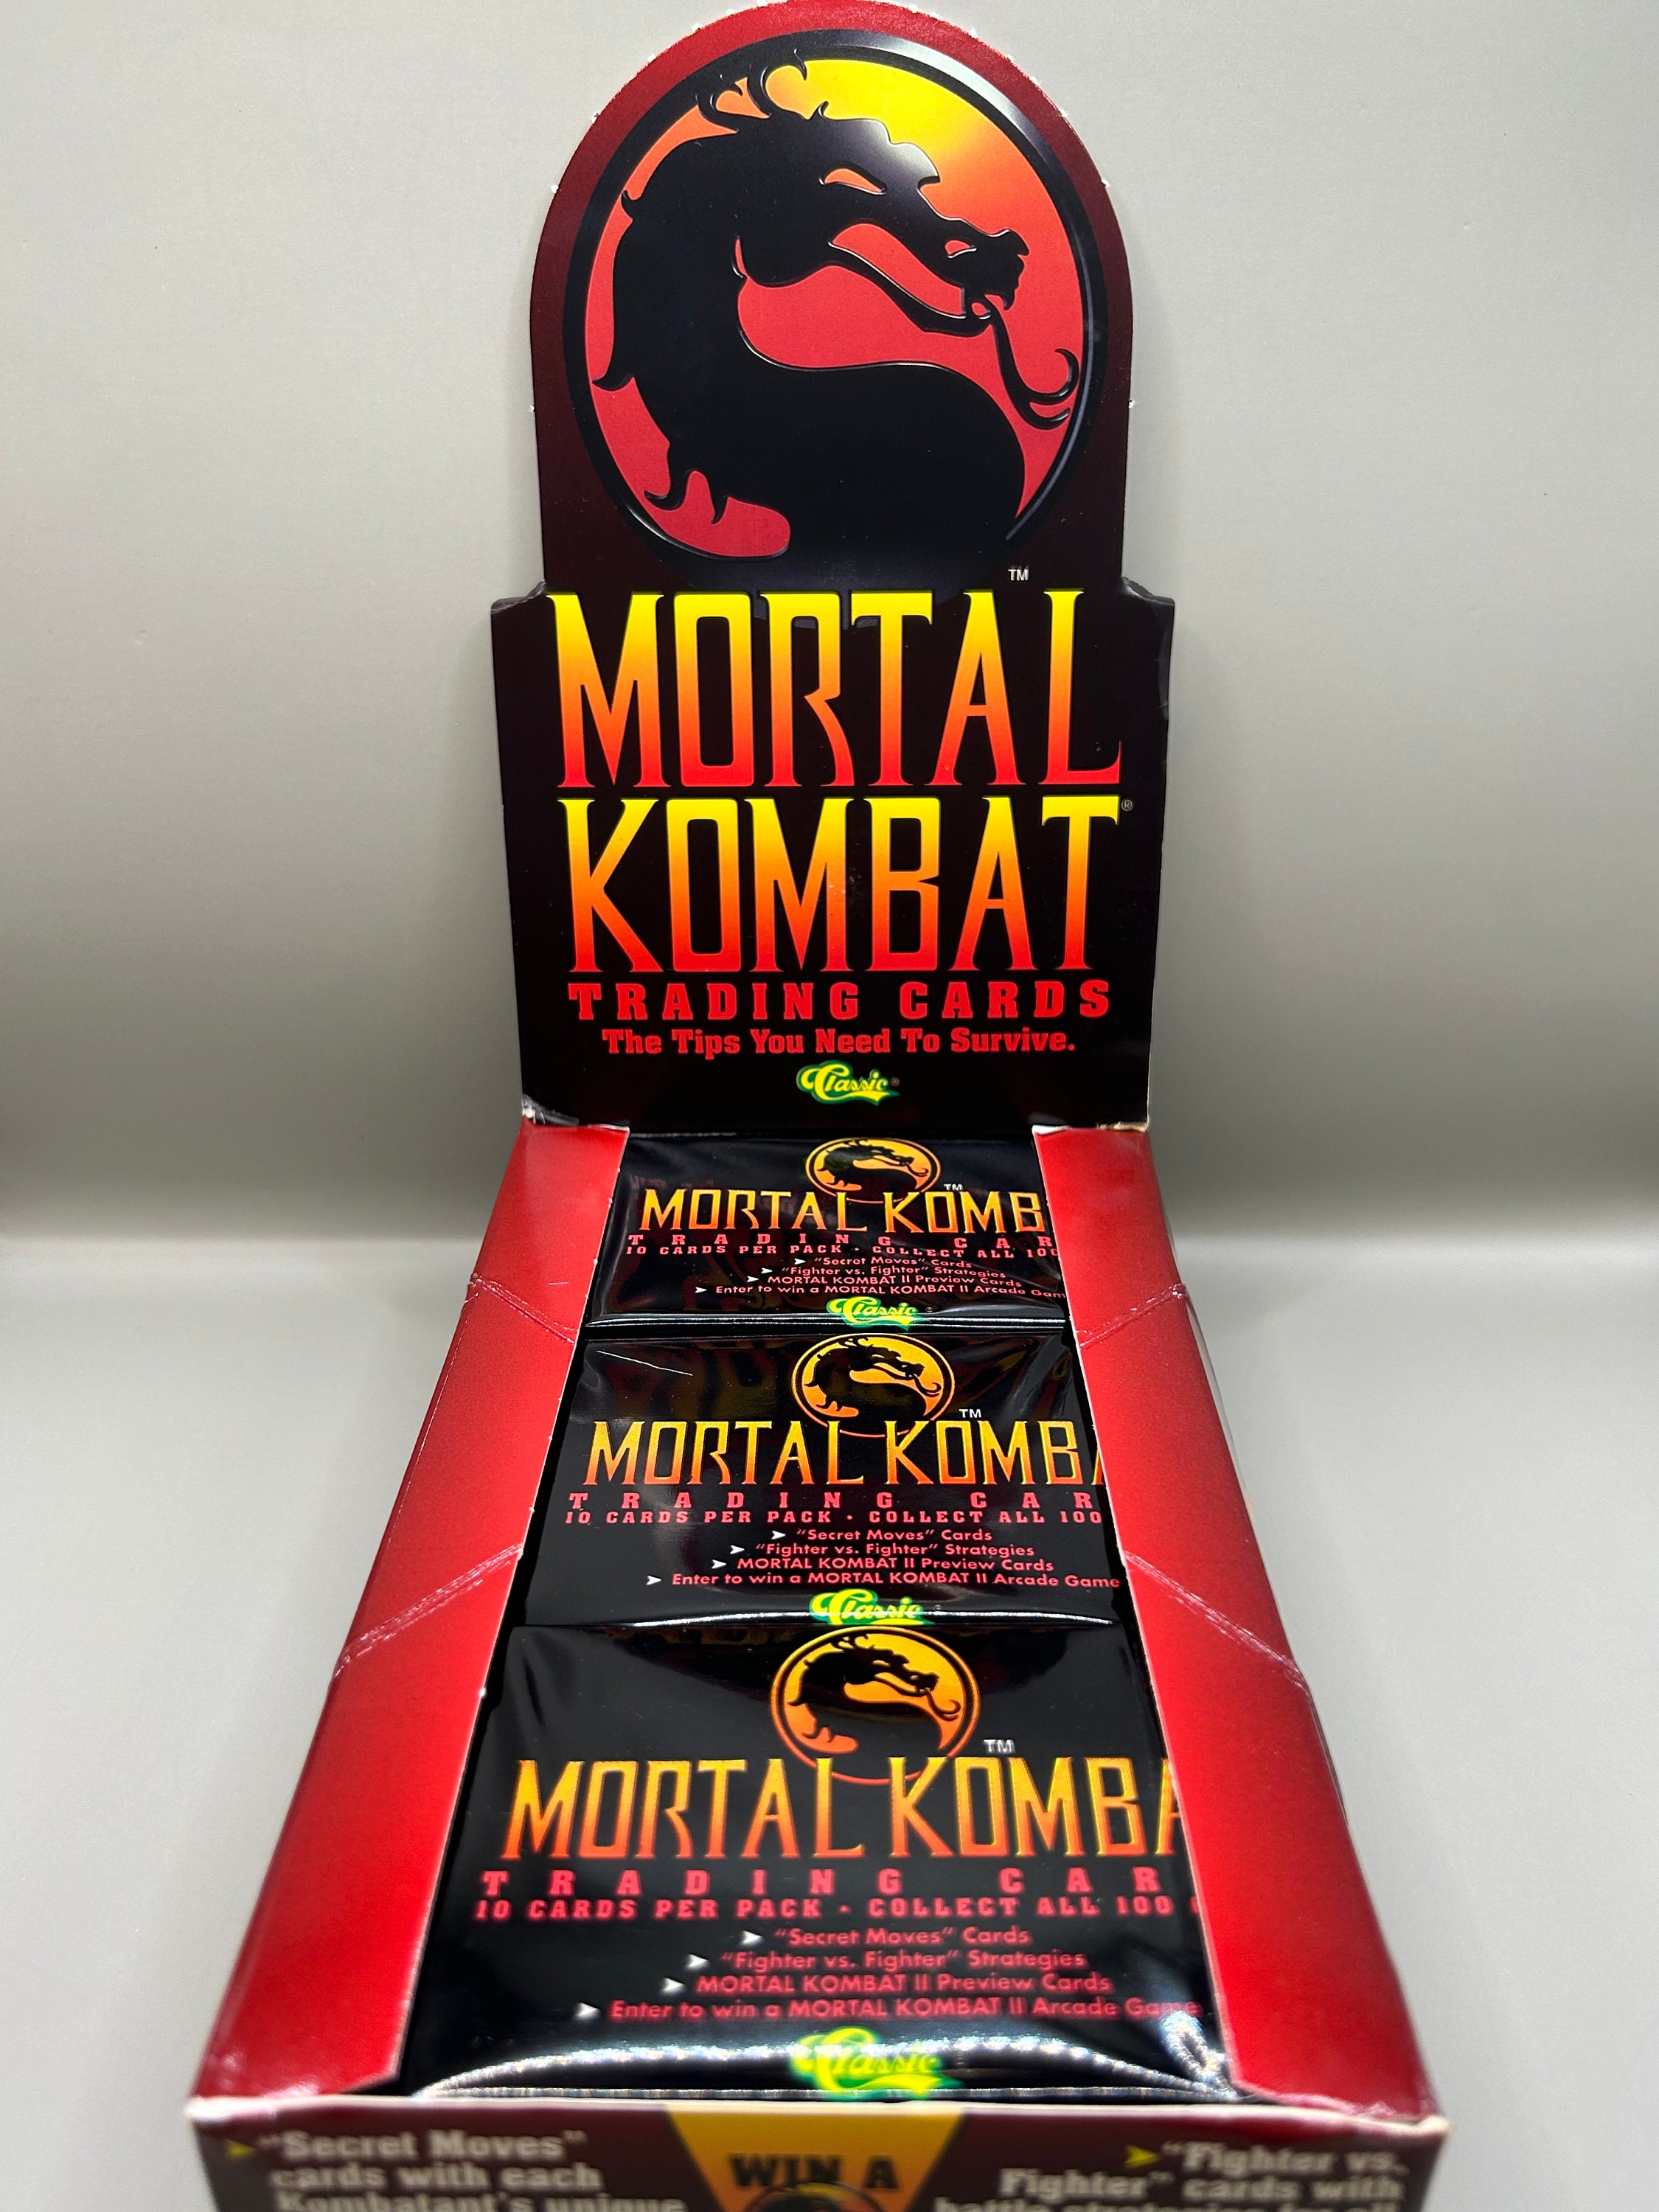 MORTAL KOMBAT debuted 30 years ago today in 1992 : r/nostalgia